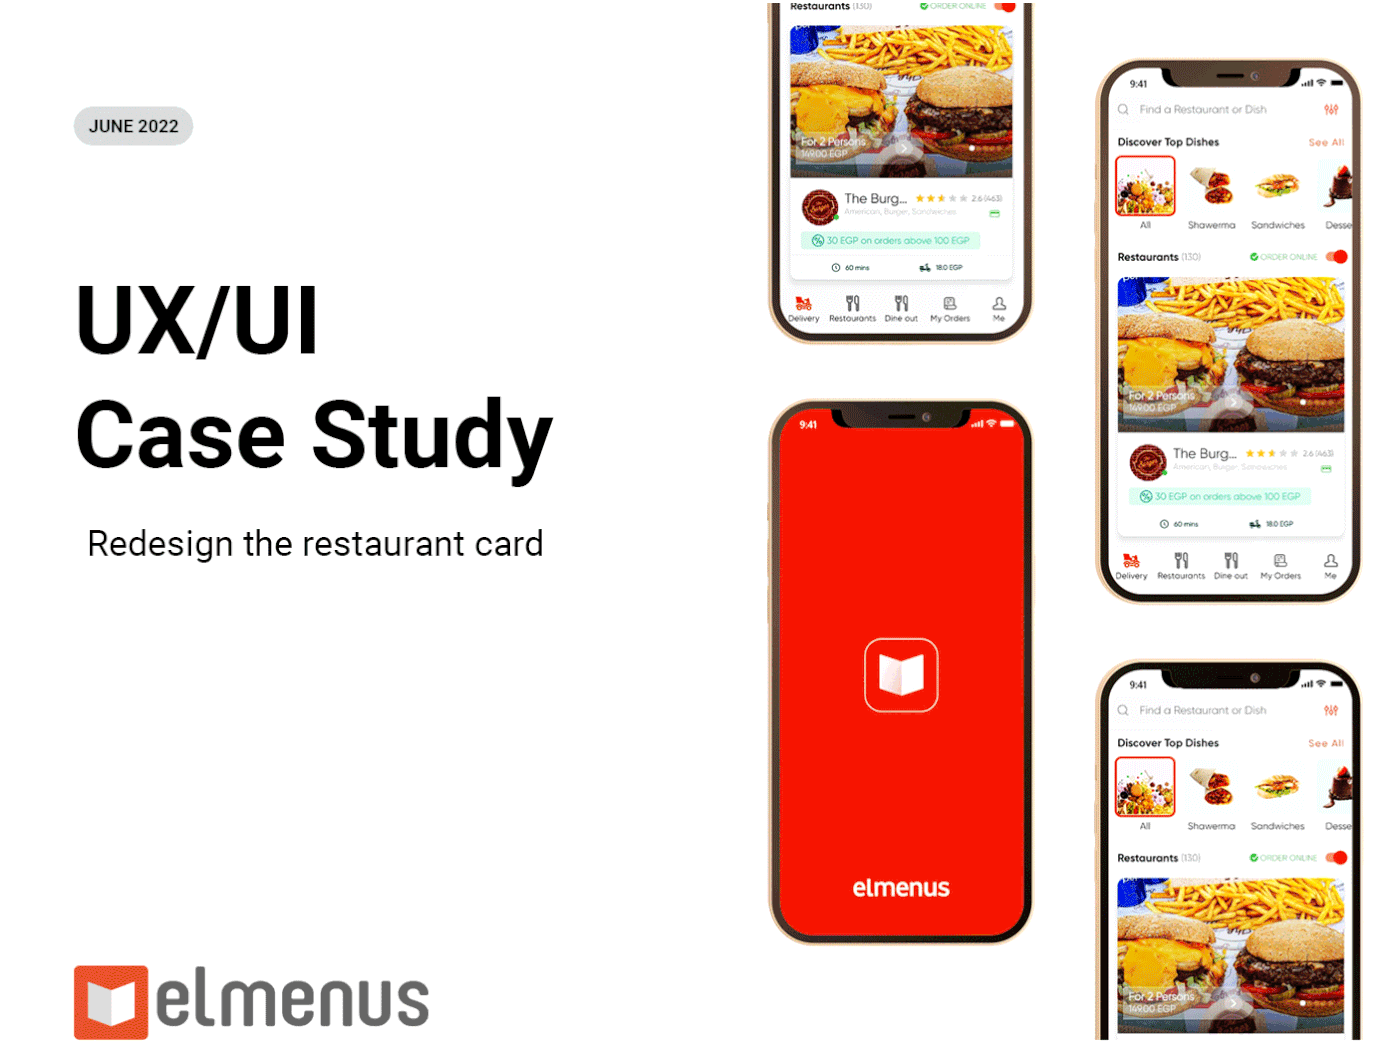 UI/UX user interface UX design Case Study Mobile app user experience app design ux/ui ui design app